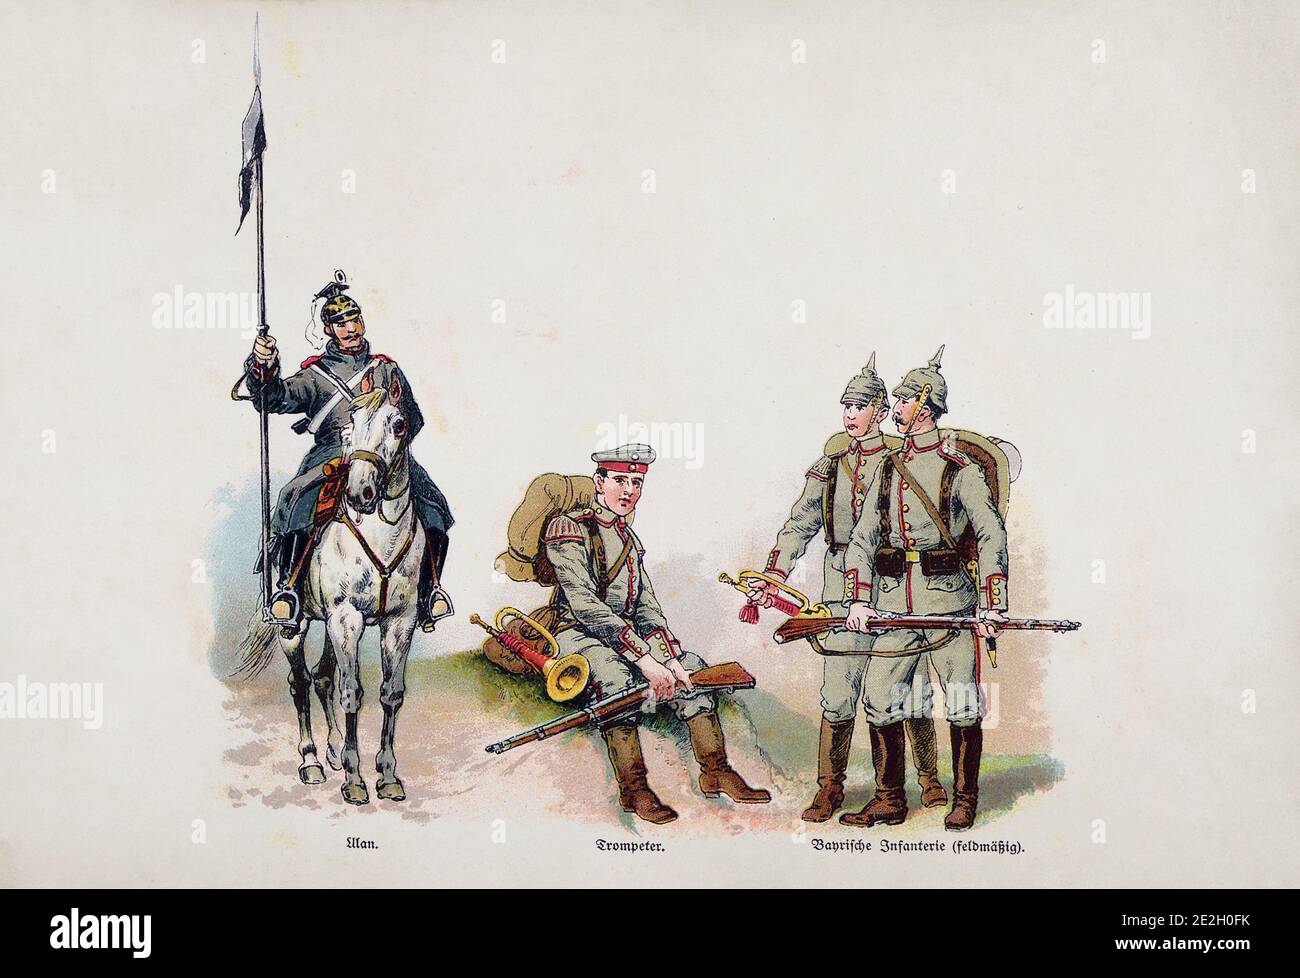 Imperial German Army (Deutsches Heer). Ulan (lancer), trumpeter, Bavarian Infanry (field uniform). German Empire. 1910s Stock Photo